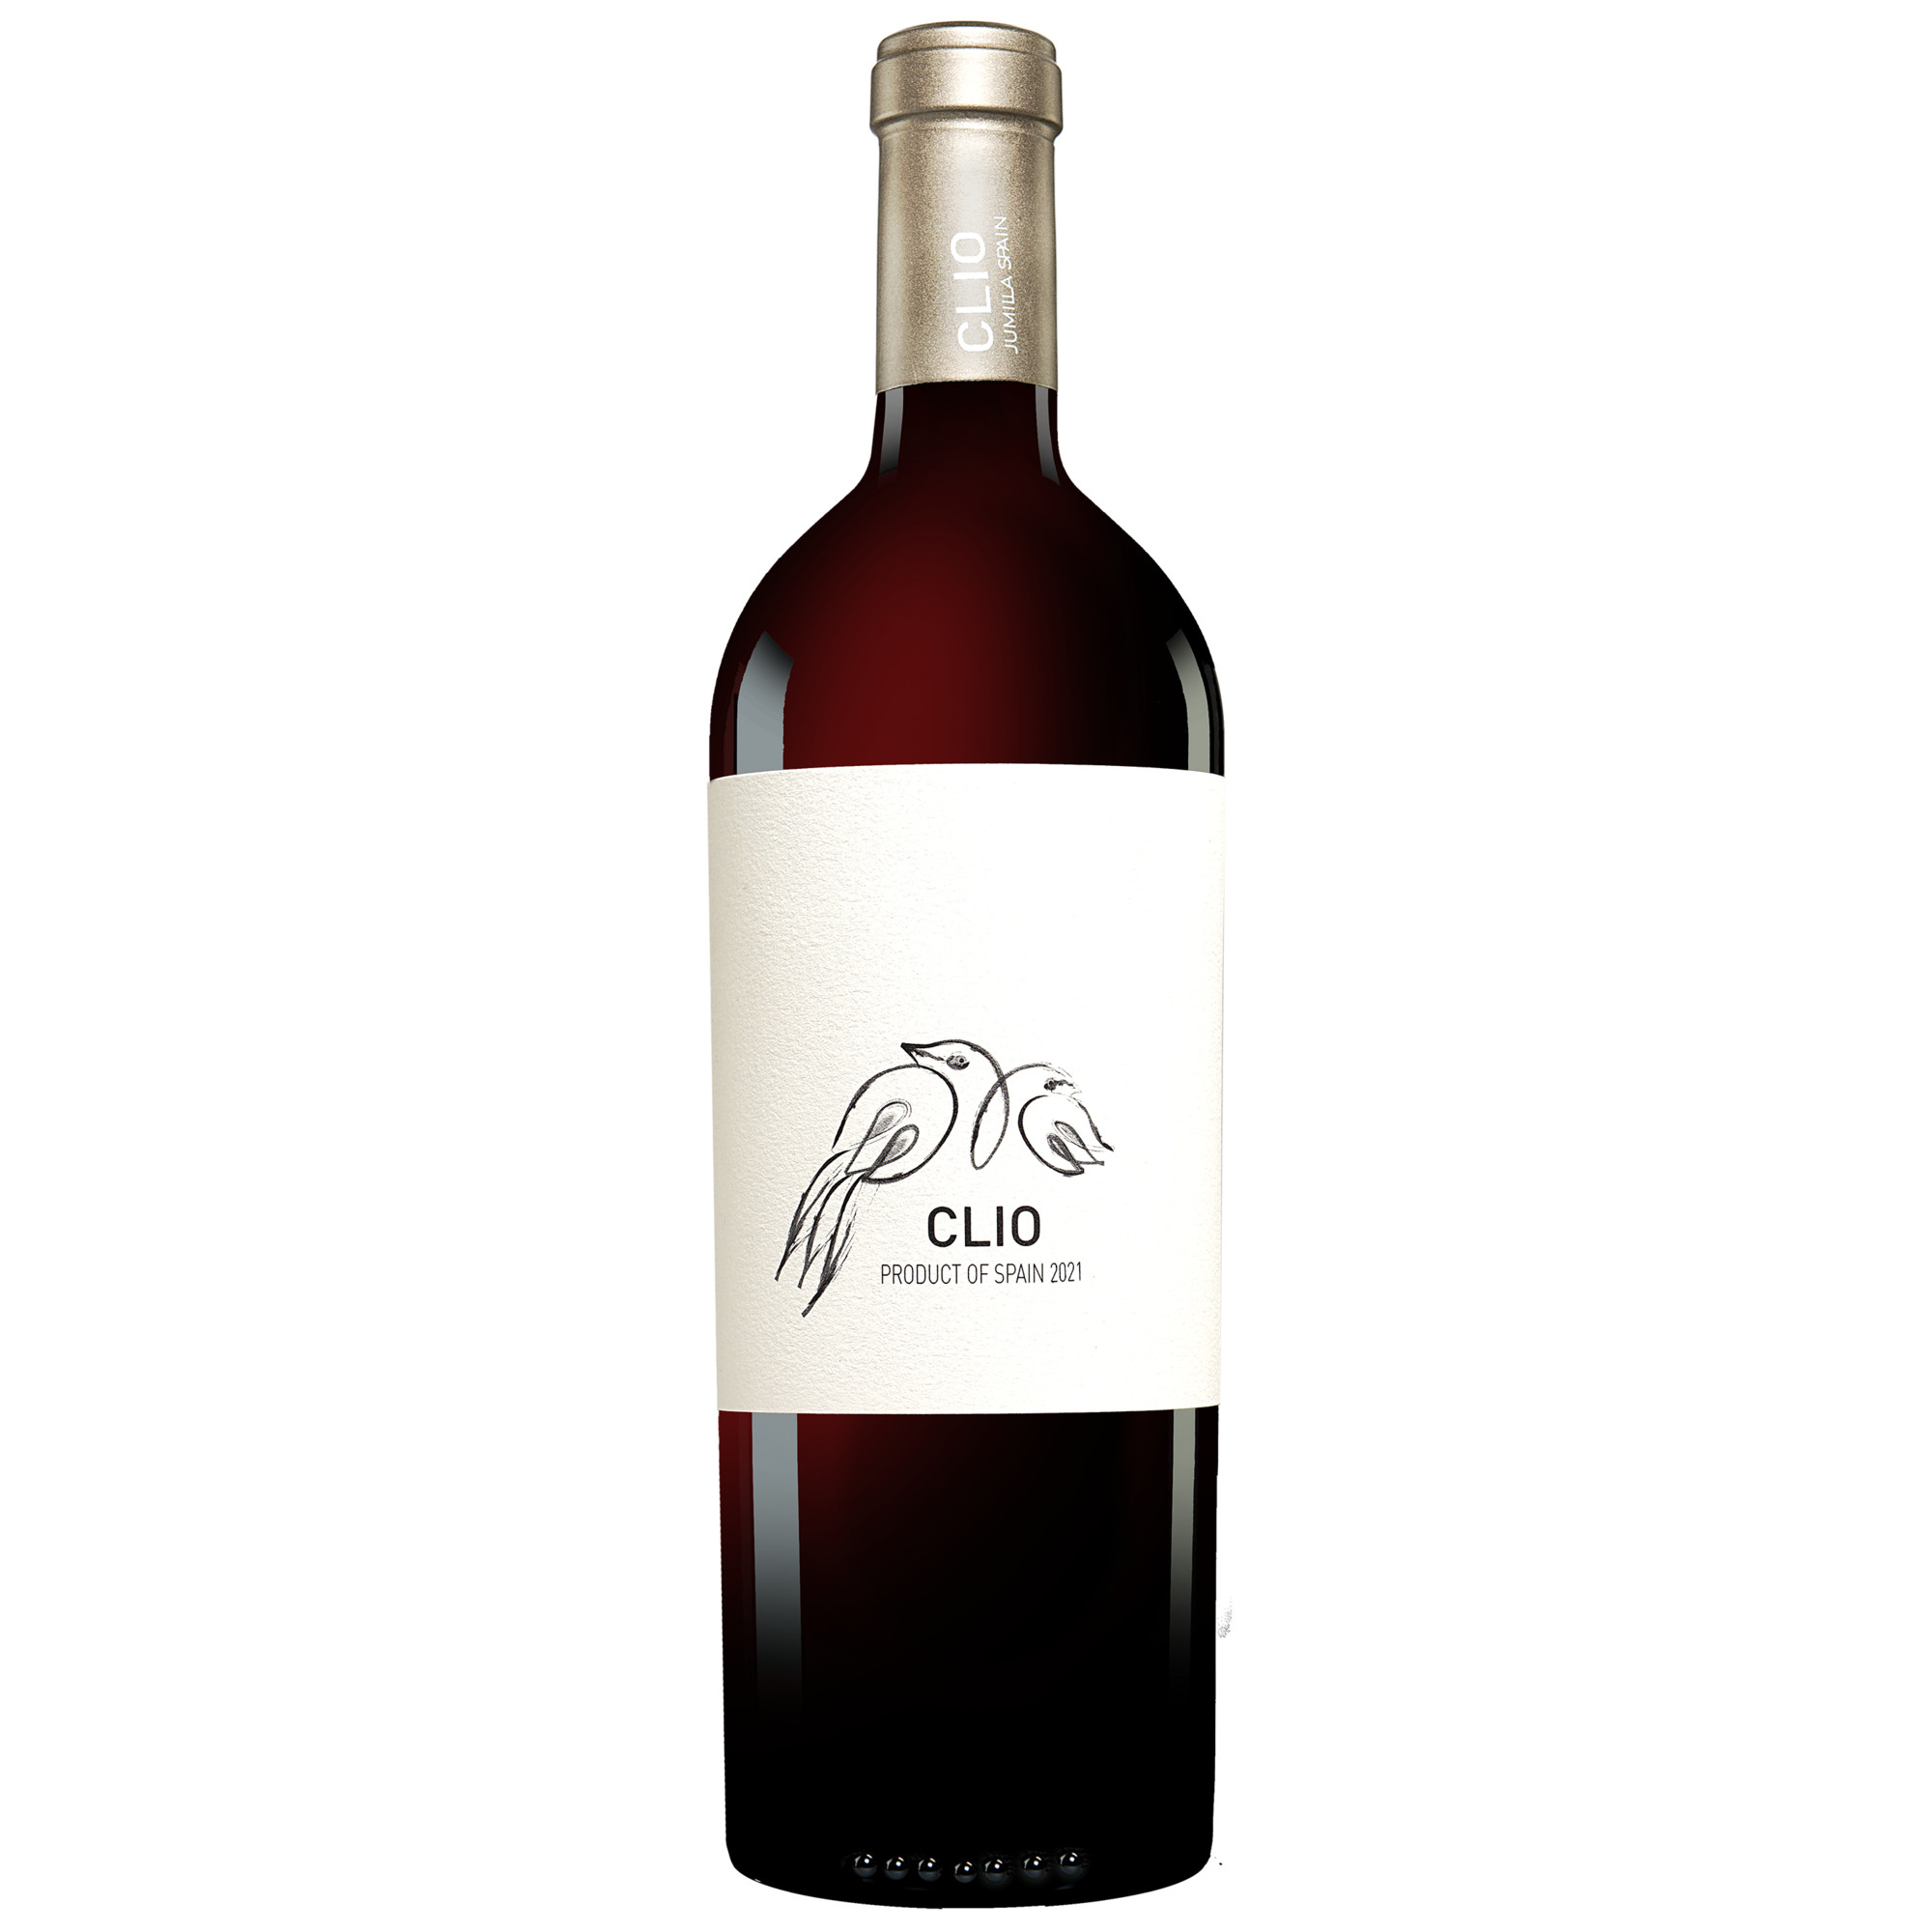 Tondonia »Viña Cubillo« Tinto Crianza 2015 0.75L 13.5% Vol. Rotwein Trocken aus Spanien